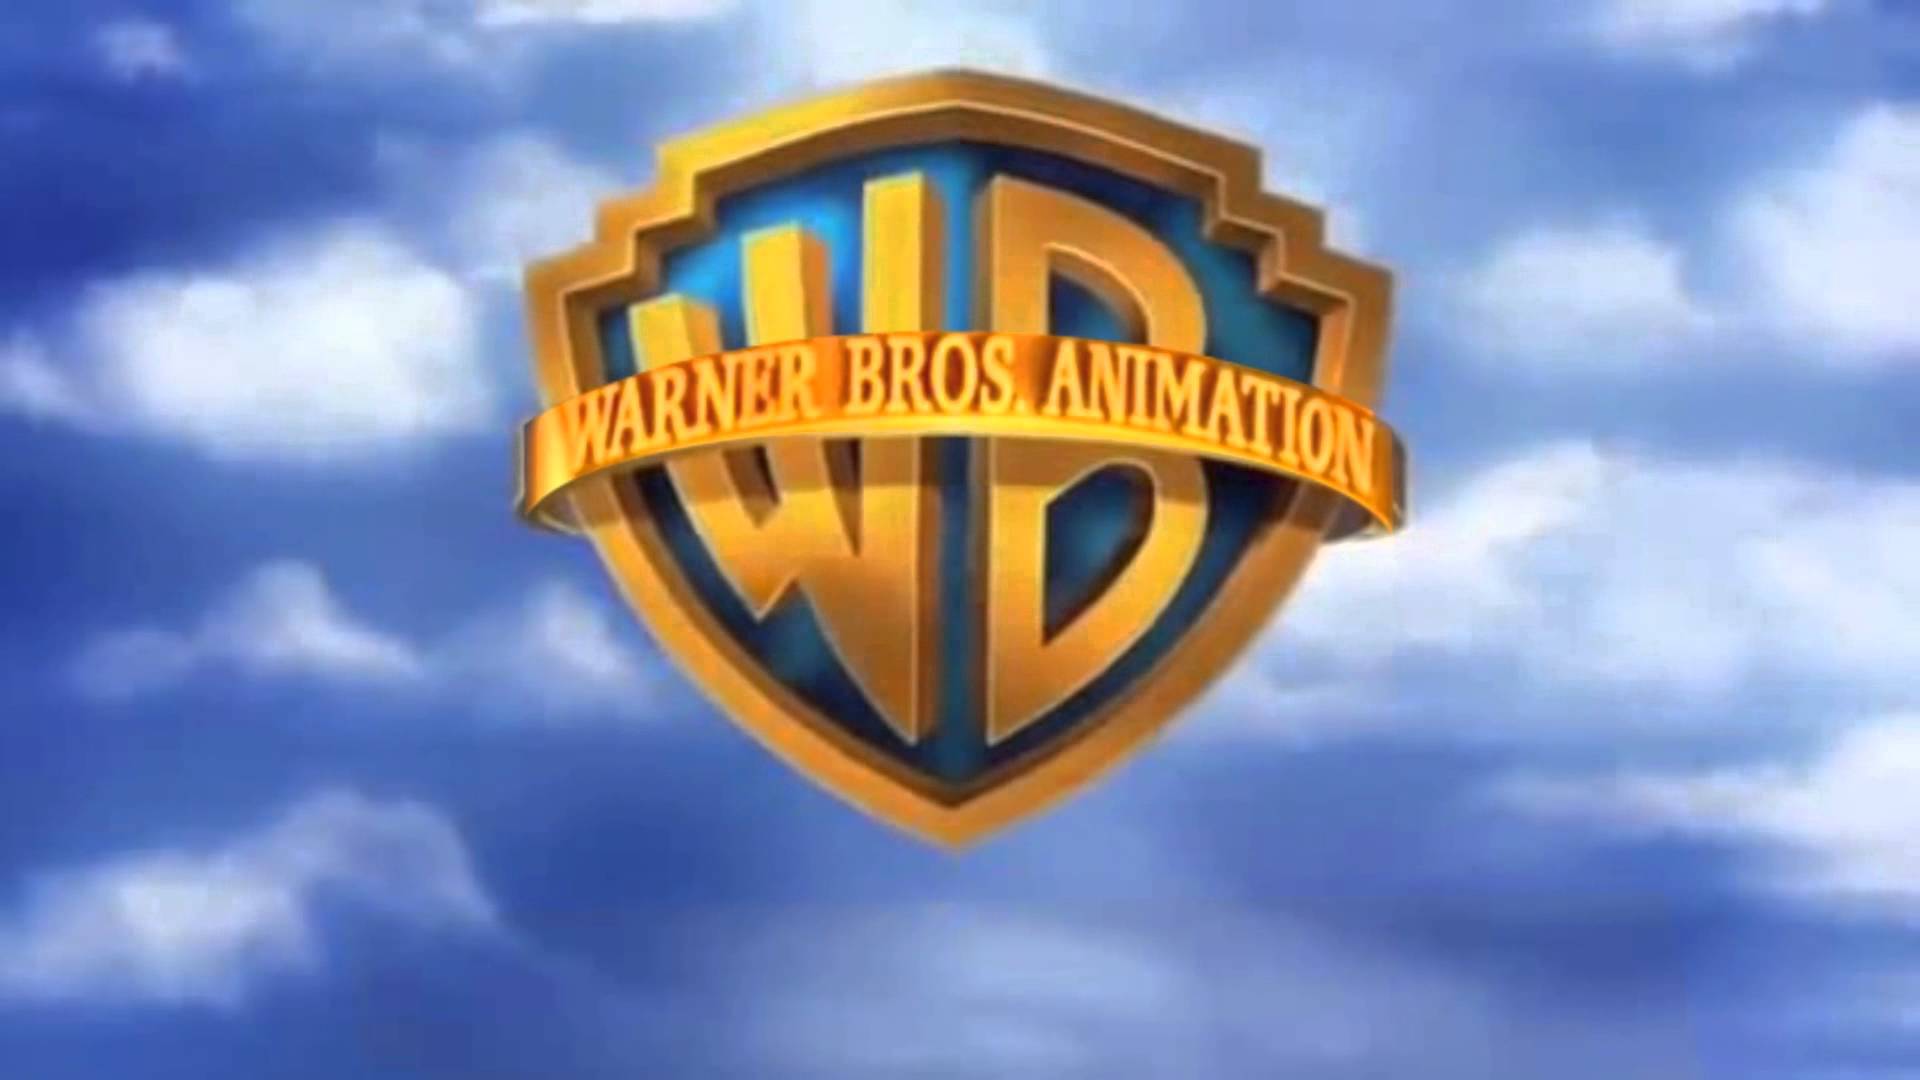 Warner bros animation Logos.